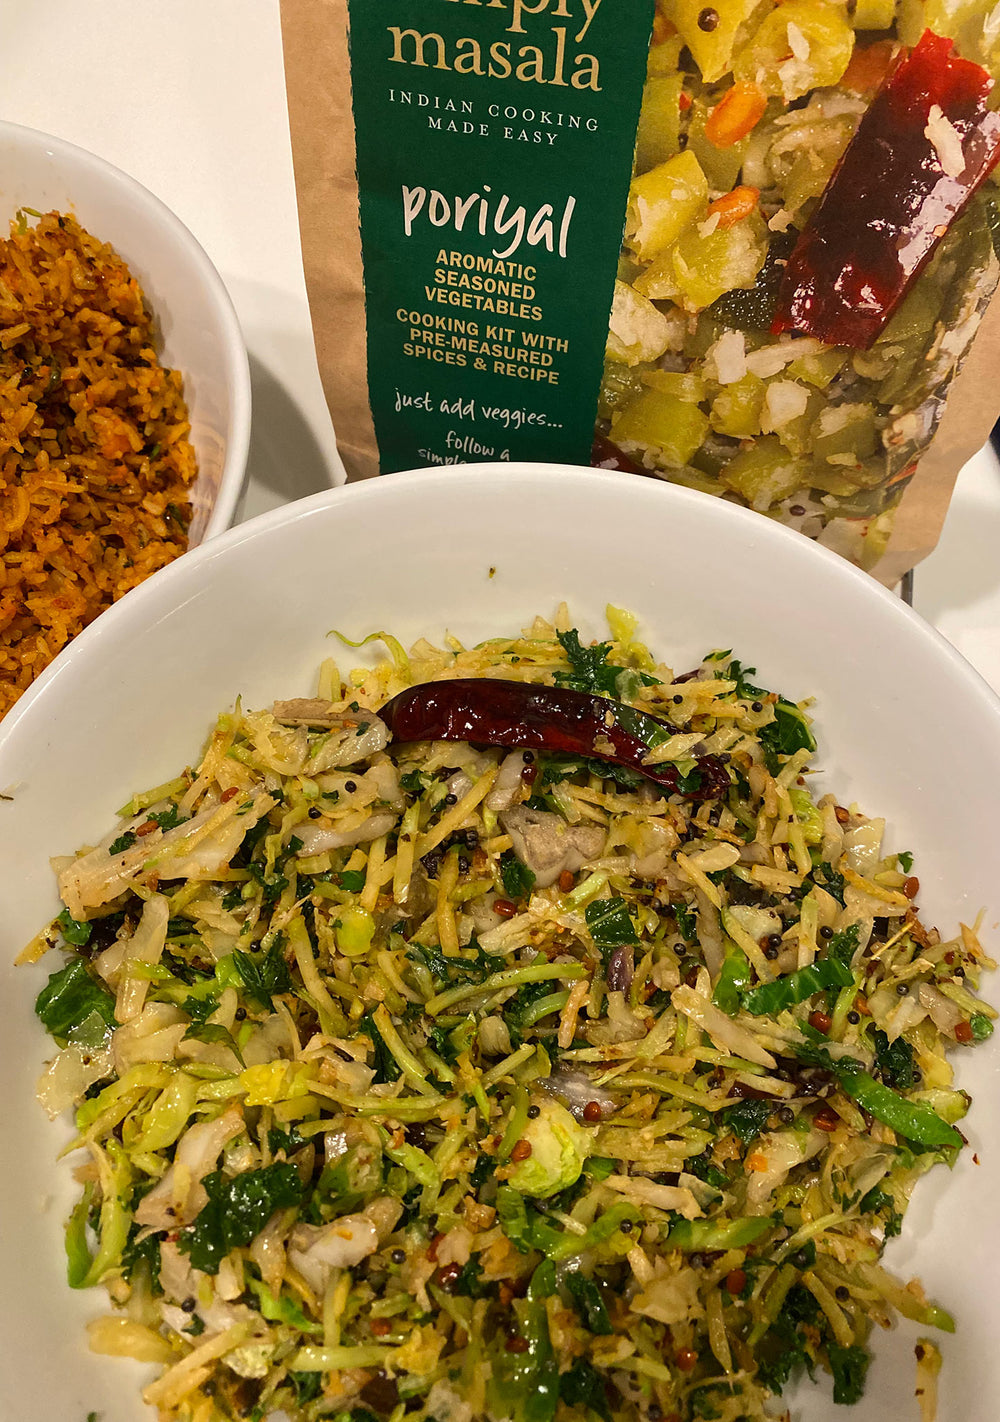 Anju Prepared Simply Masala Poriyal Aromatic Seasoned Vegetables as a Salad with Kale